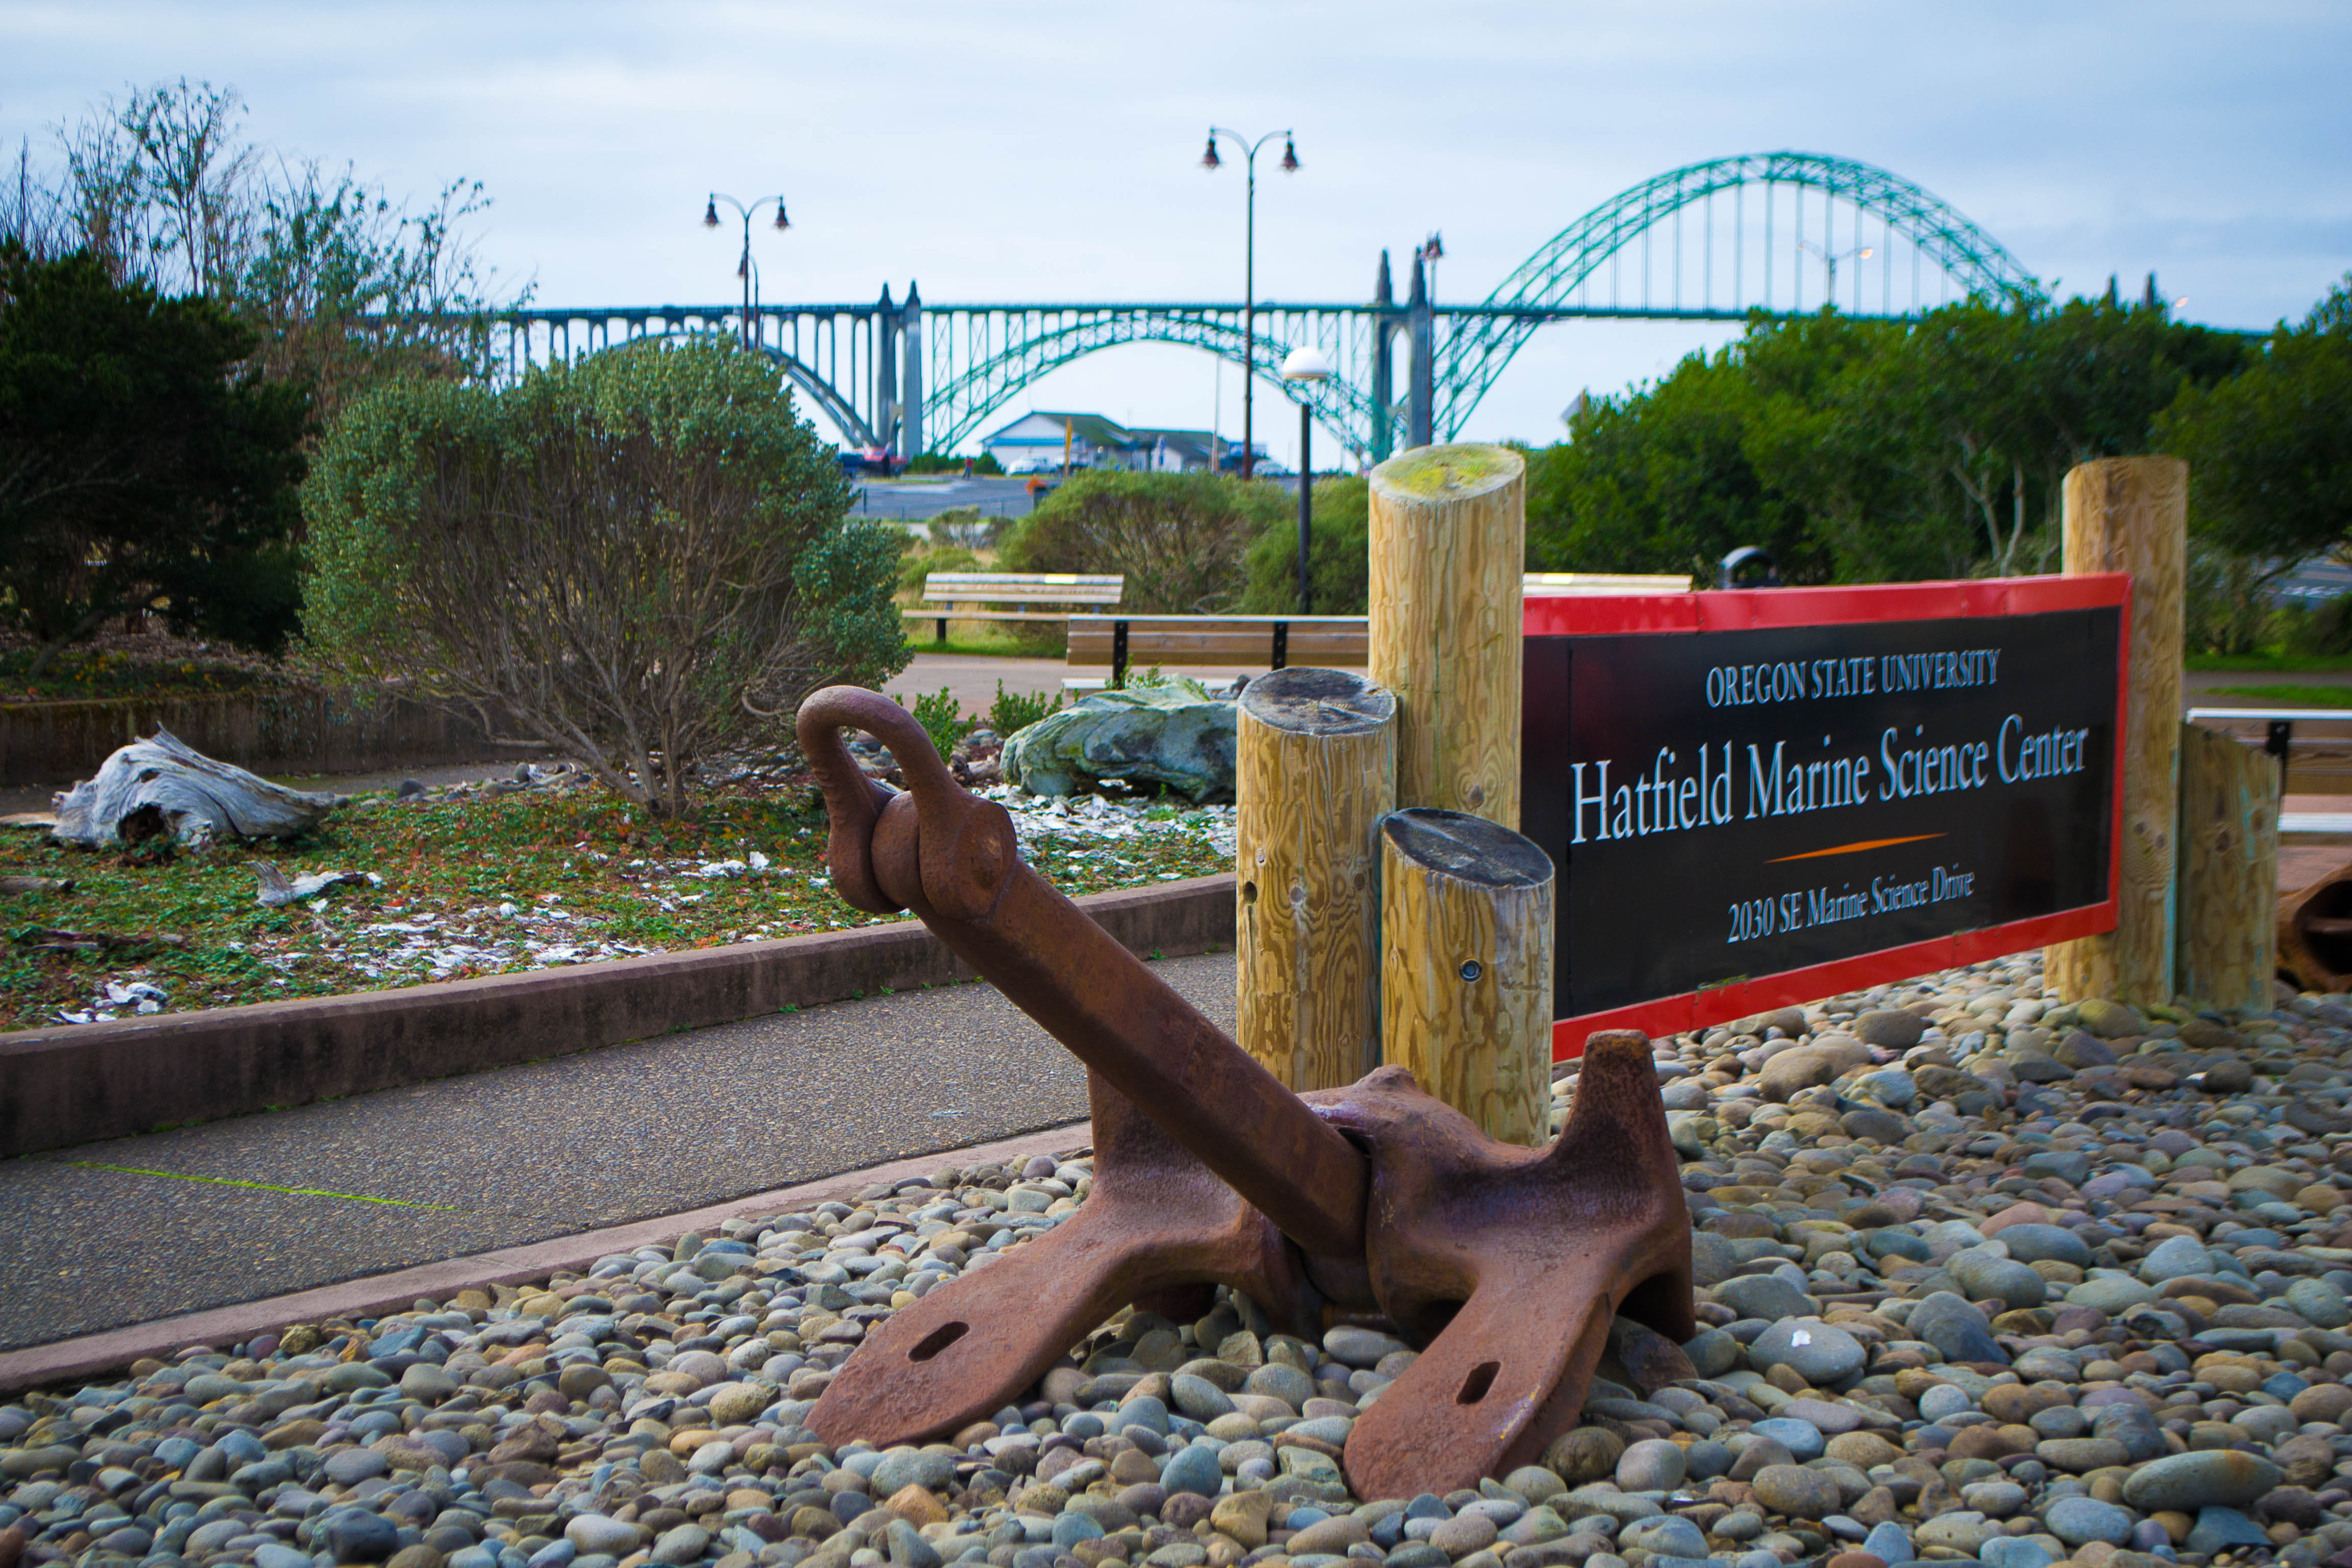 Hatfield Marine Science Center in front of Newport Bridge